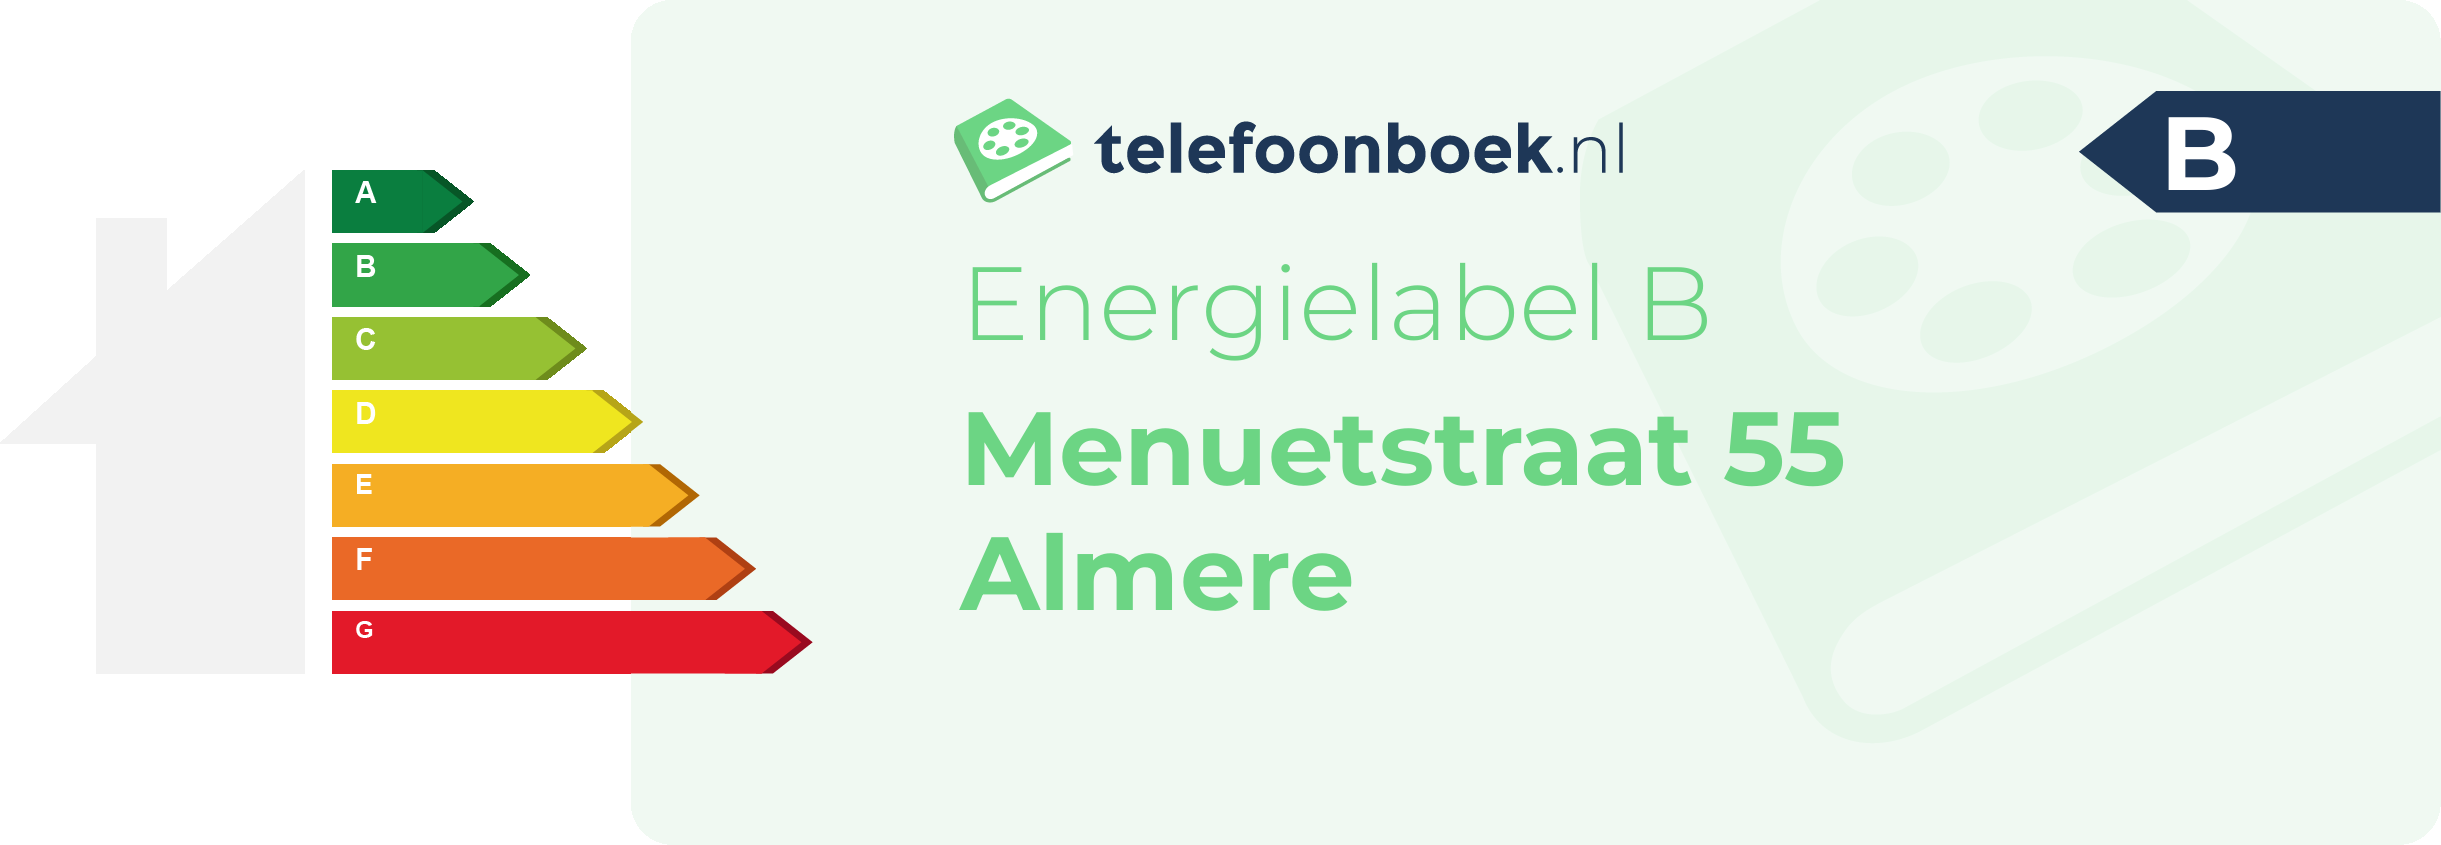 Energielabel Menuetstraat 55 Almere